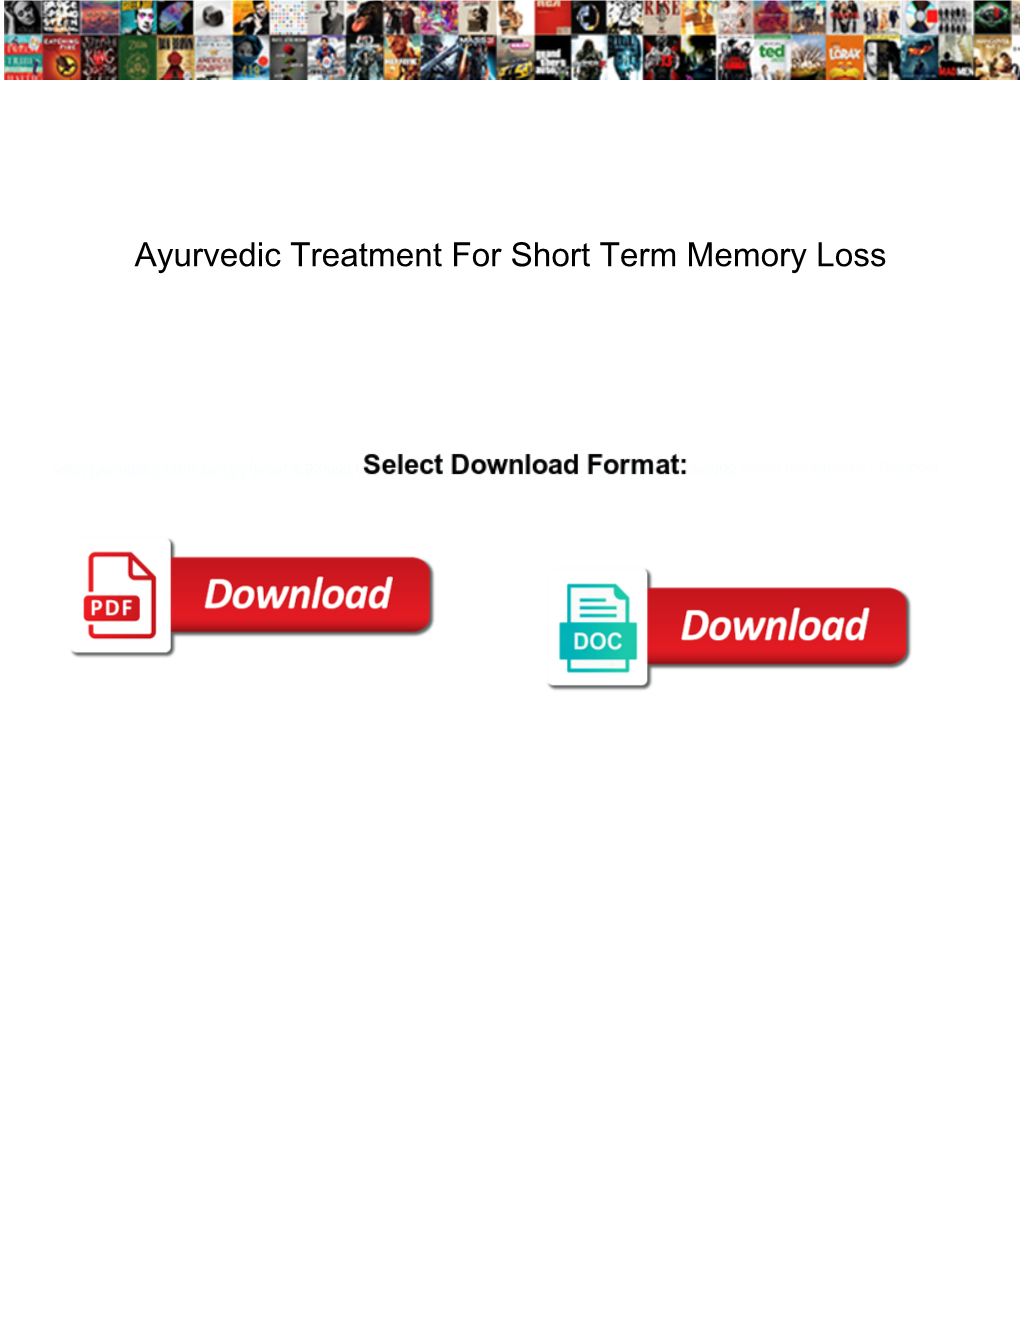 Ayurvedic Treatment for Short Term Memory Loss